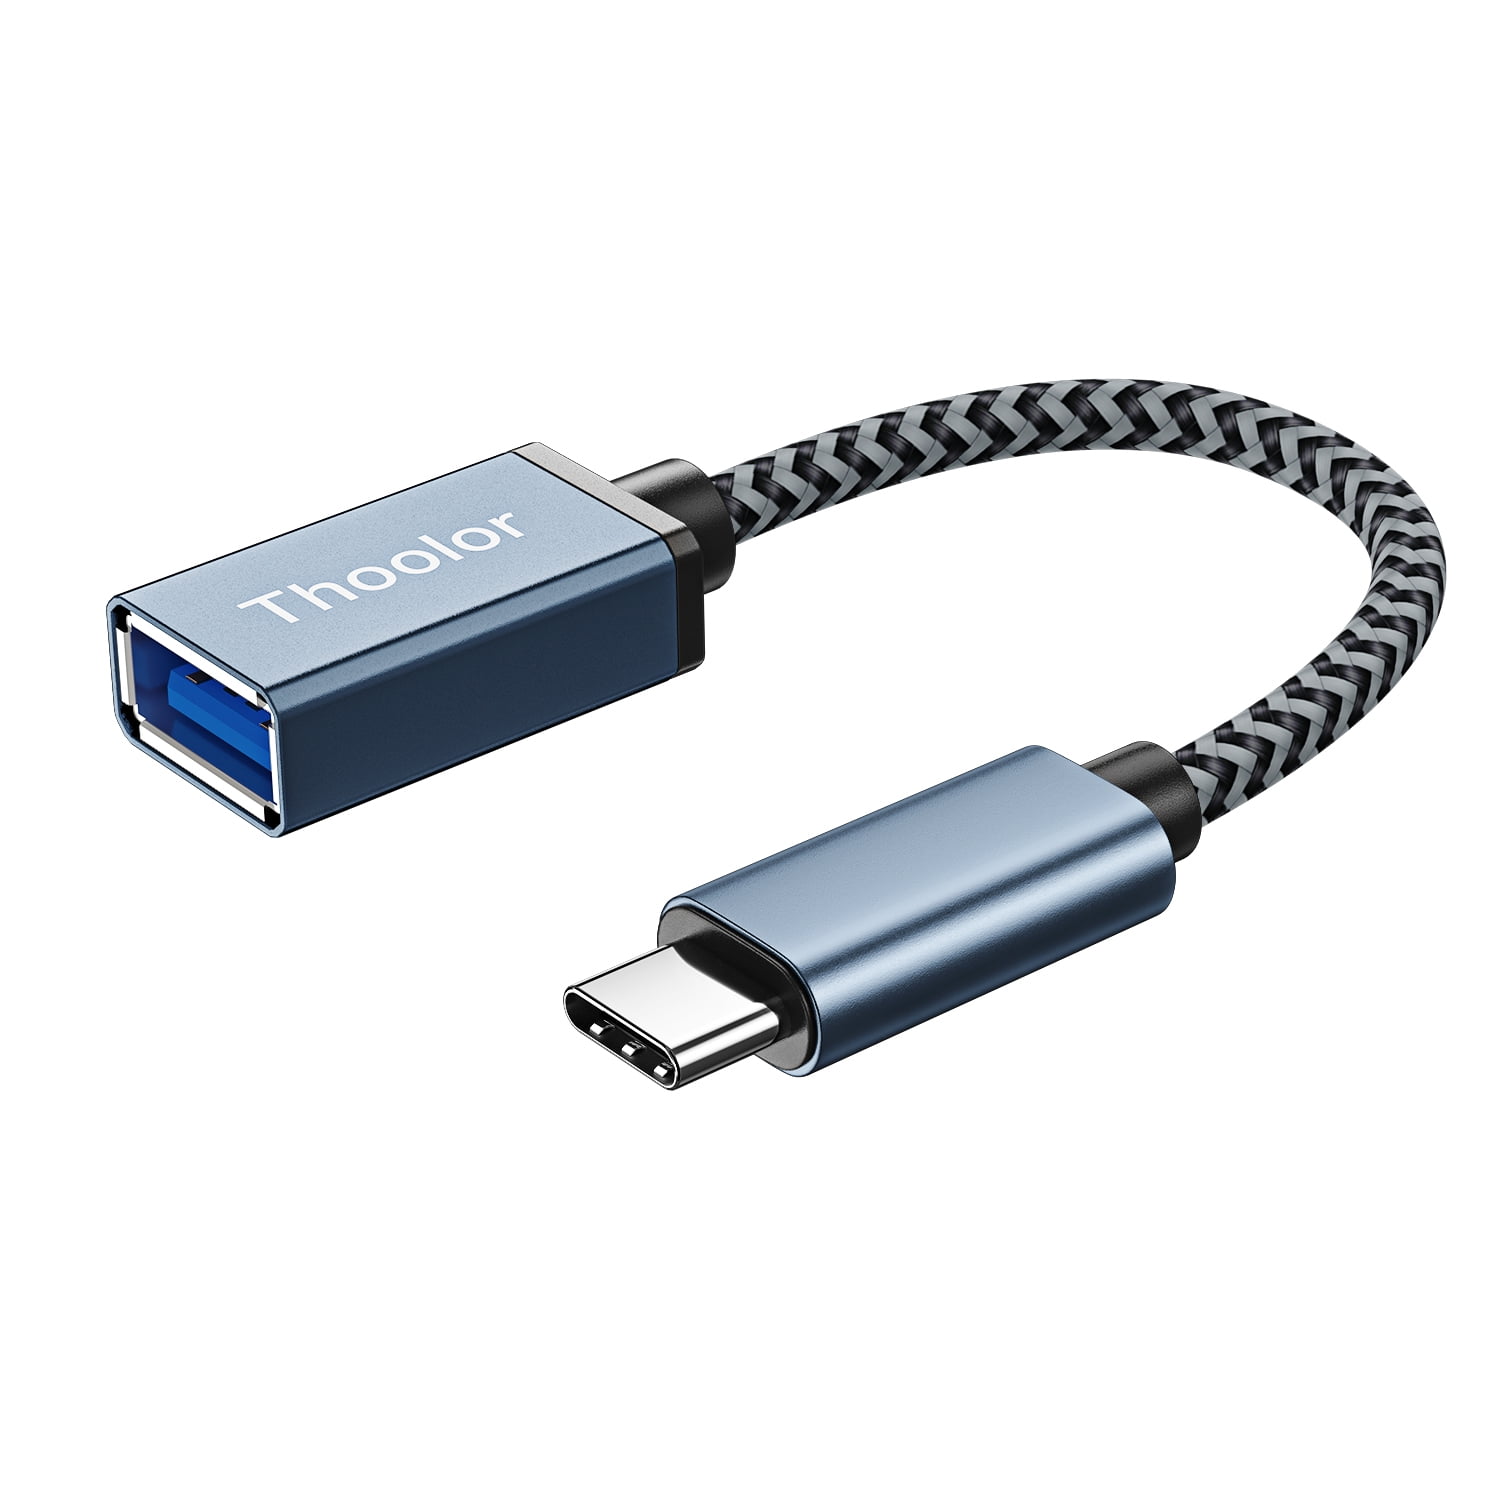 USB C to USB 3.0 Adapter Aiminu Type C OTG Cable Compatible with MacBook Pro/Air,iPad Mini,Samsung Galaxy Ultra Note 10 S8 Google Pixel 2 Xl - Walmart.com